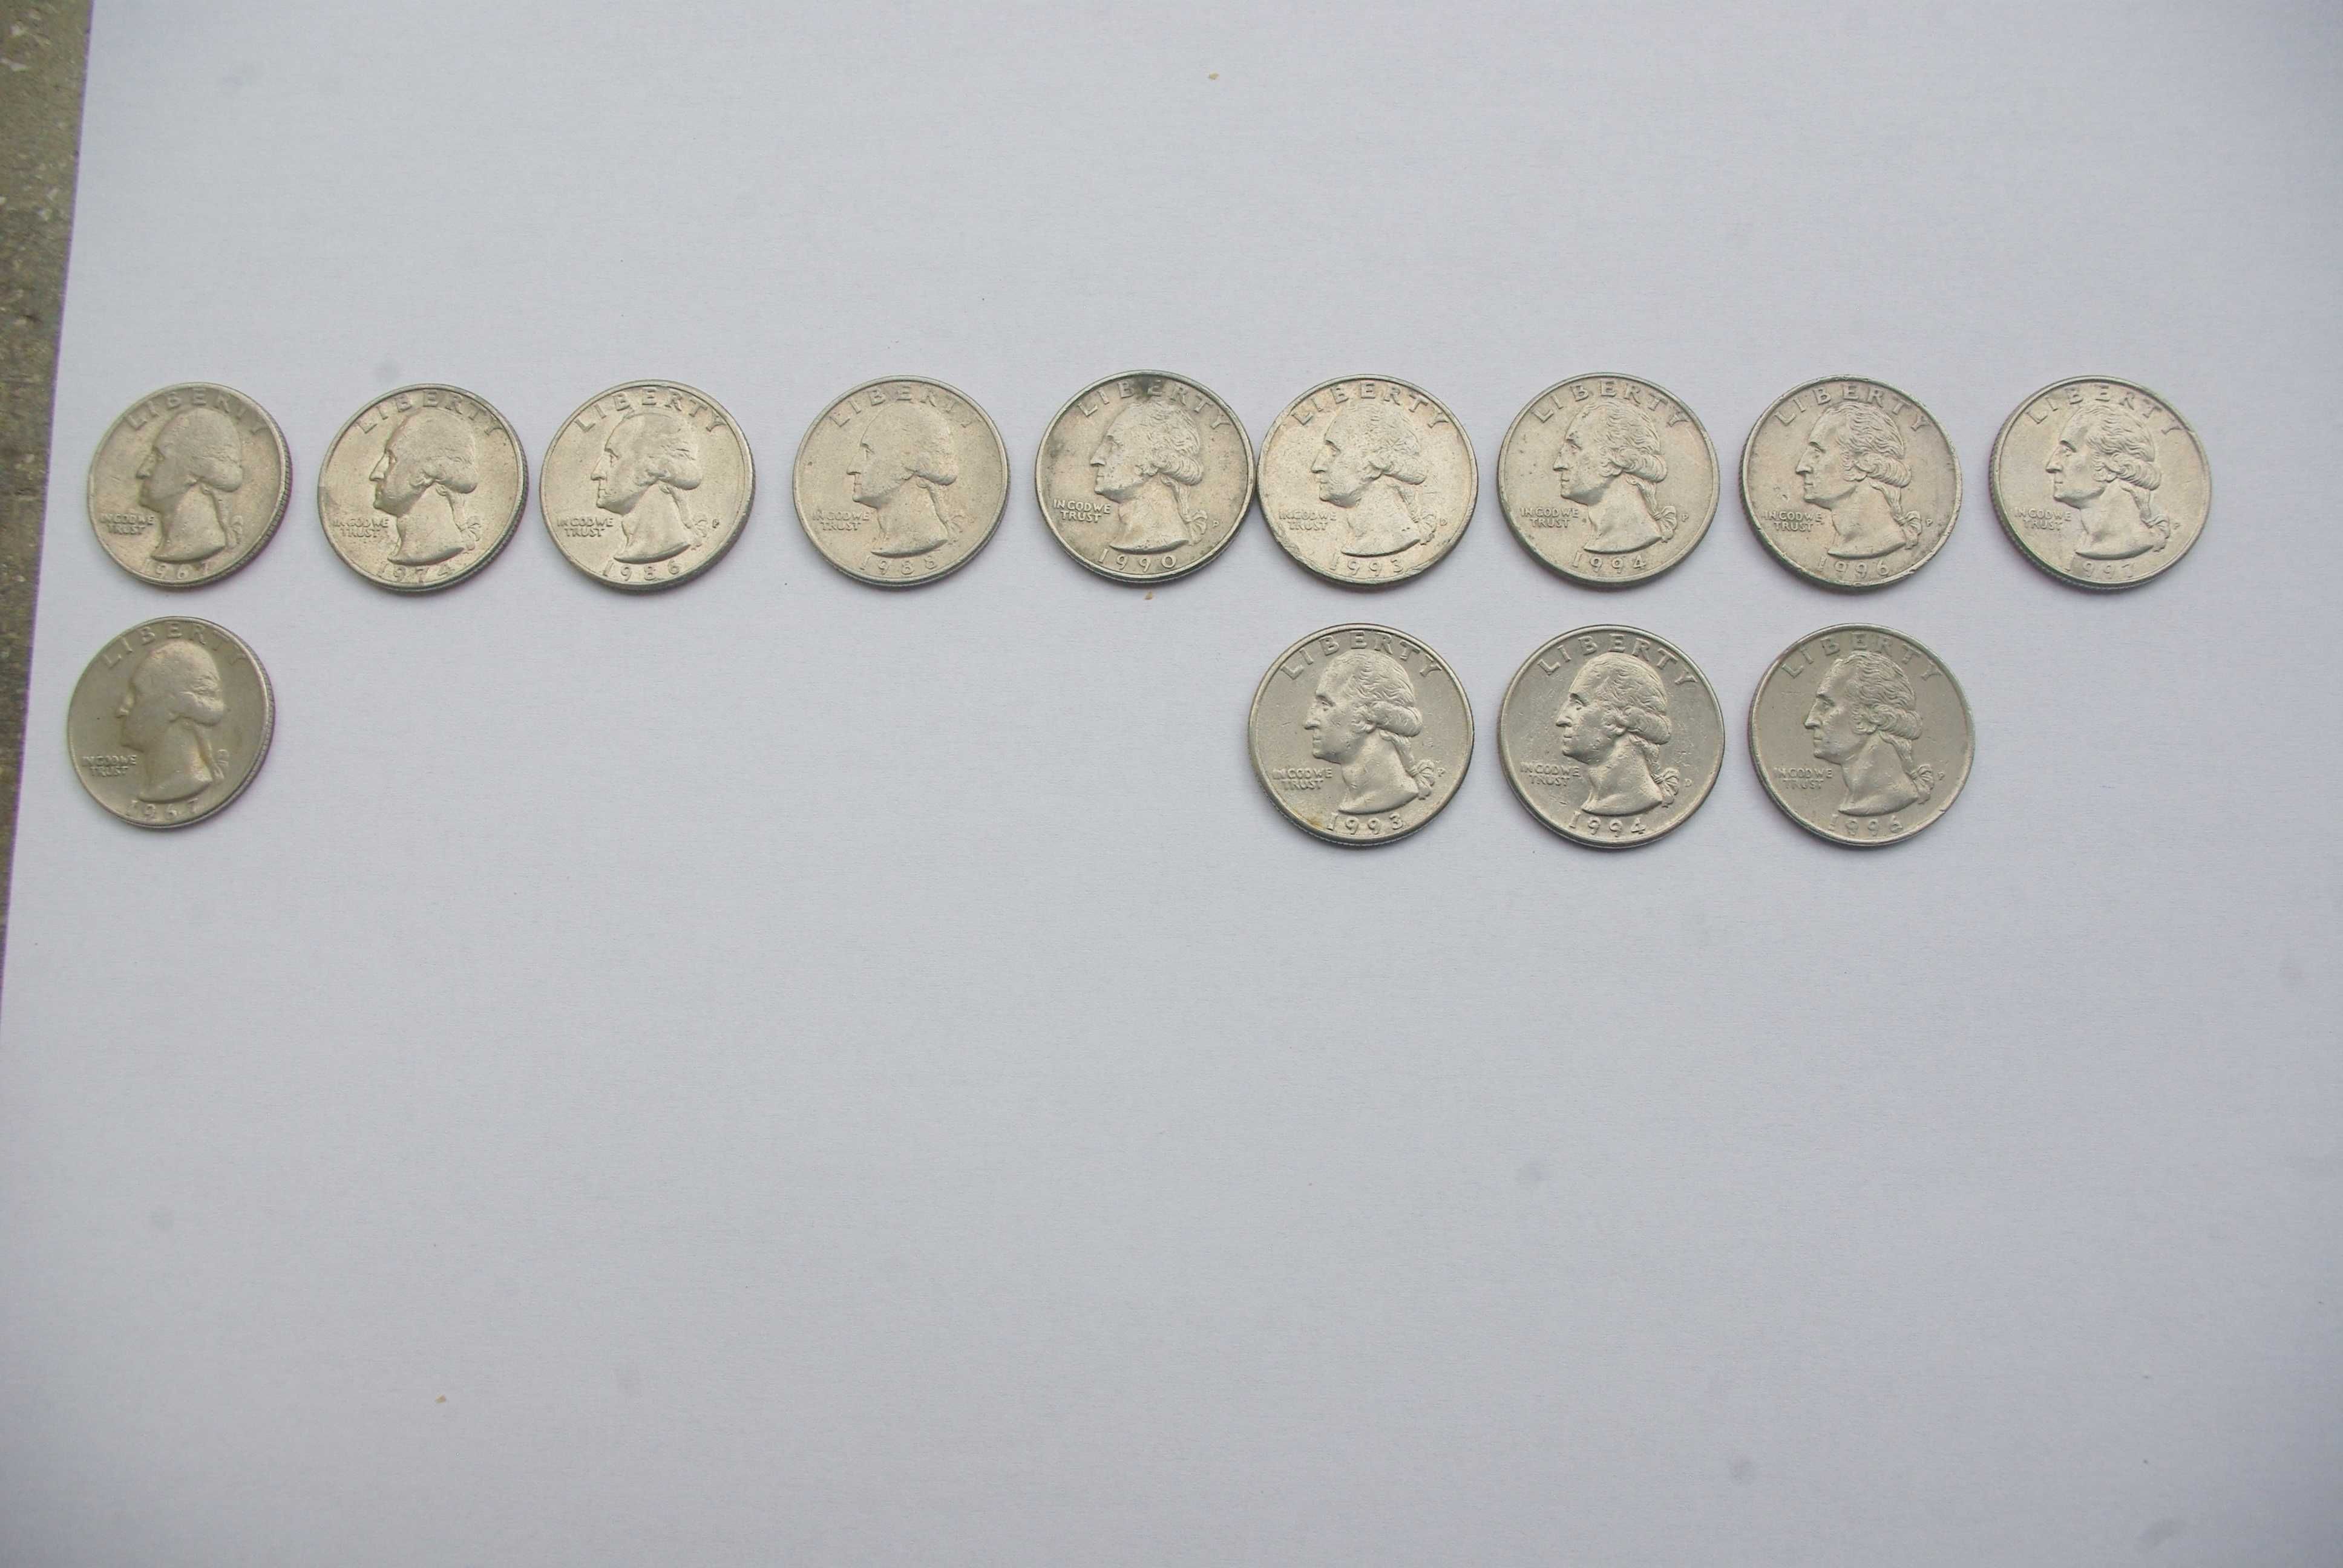 Vand colectie 25 centi USA (quarter dollar) anii 1967-1997, 13 bucati